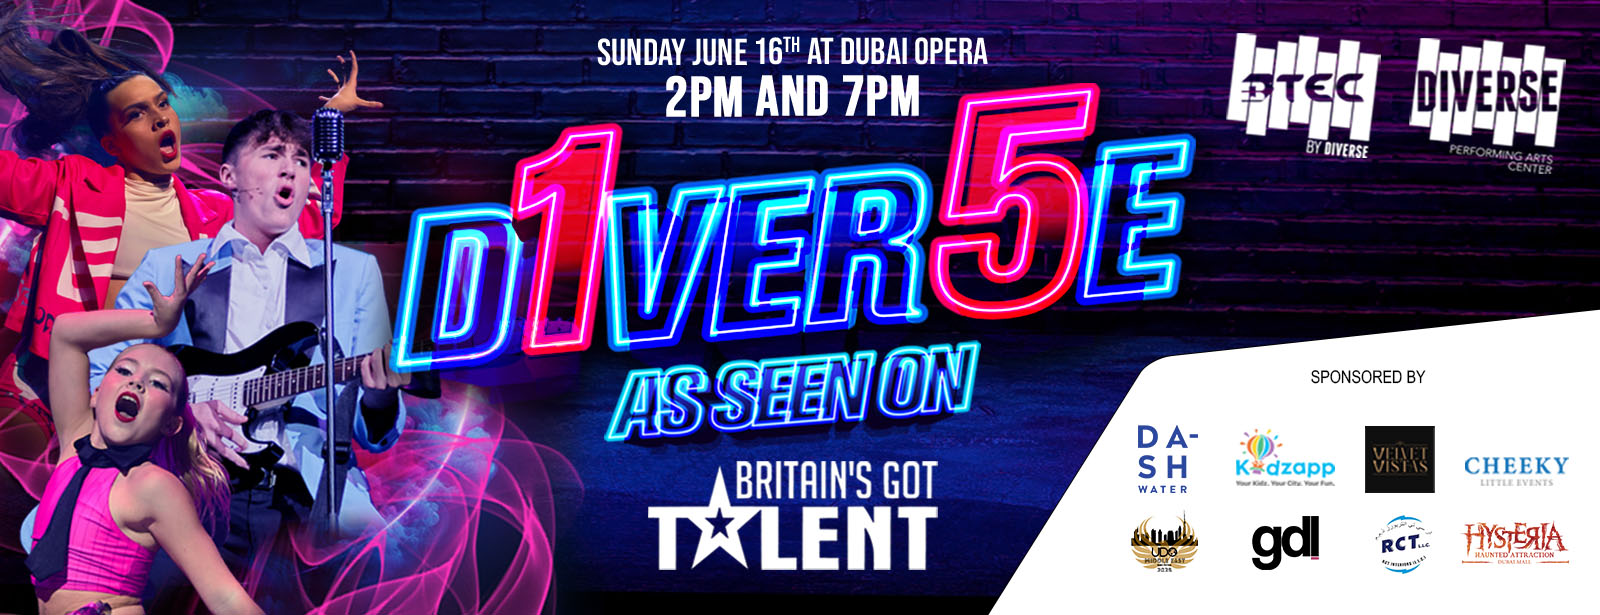 D1VER5E at Dubai Opera - Coming Soon in UAE